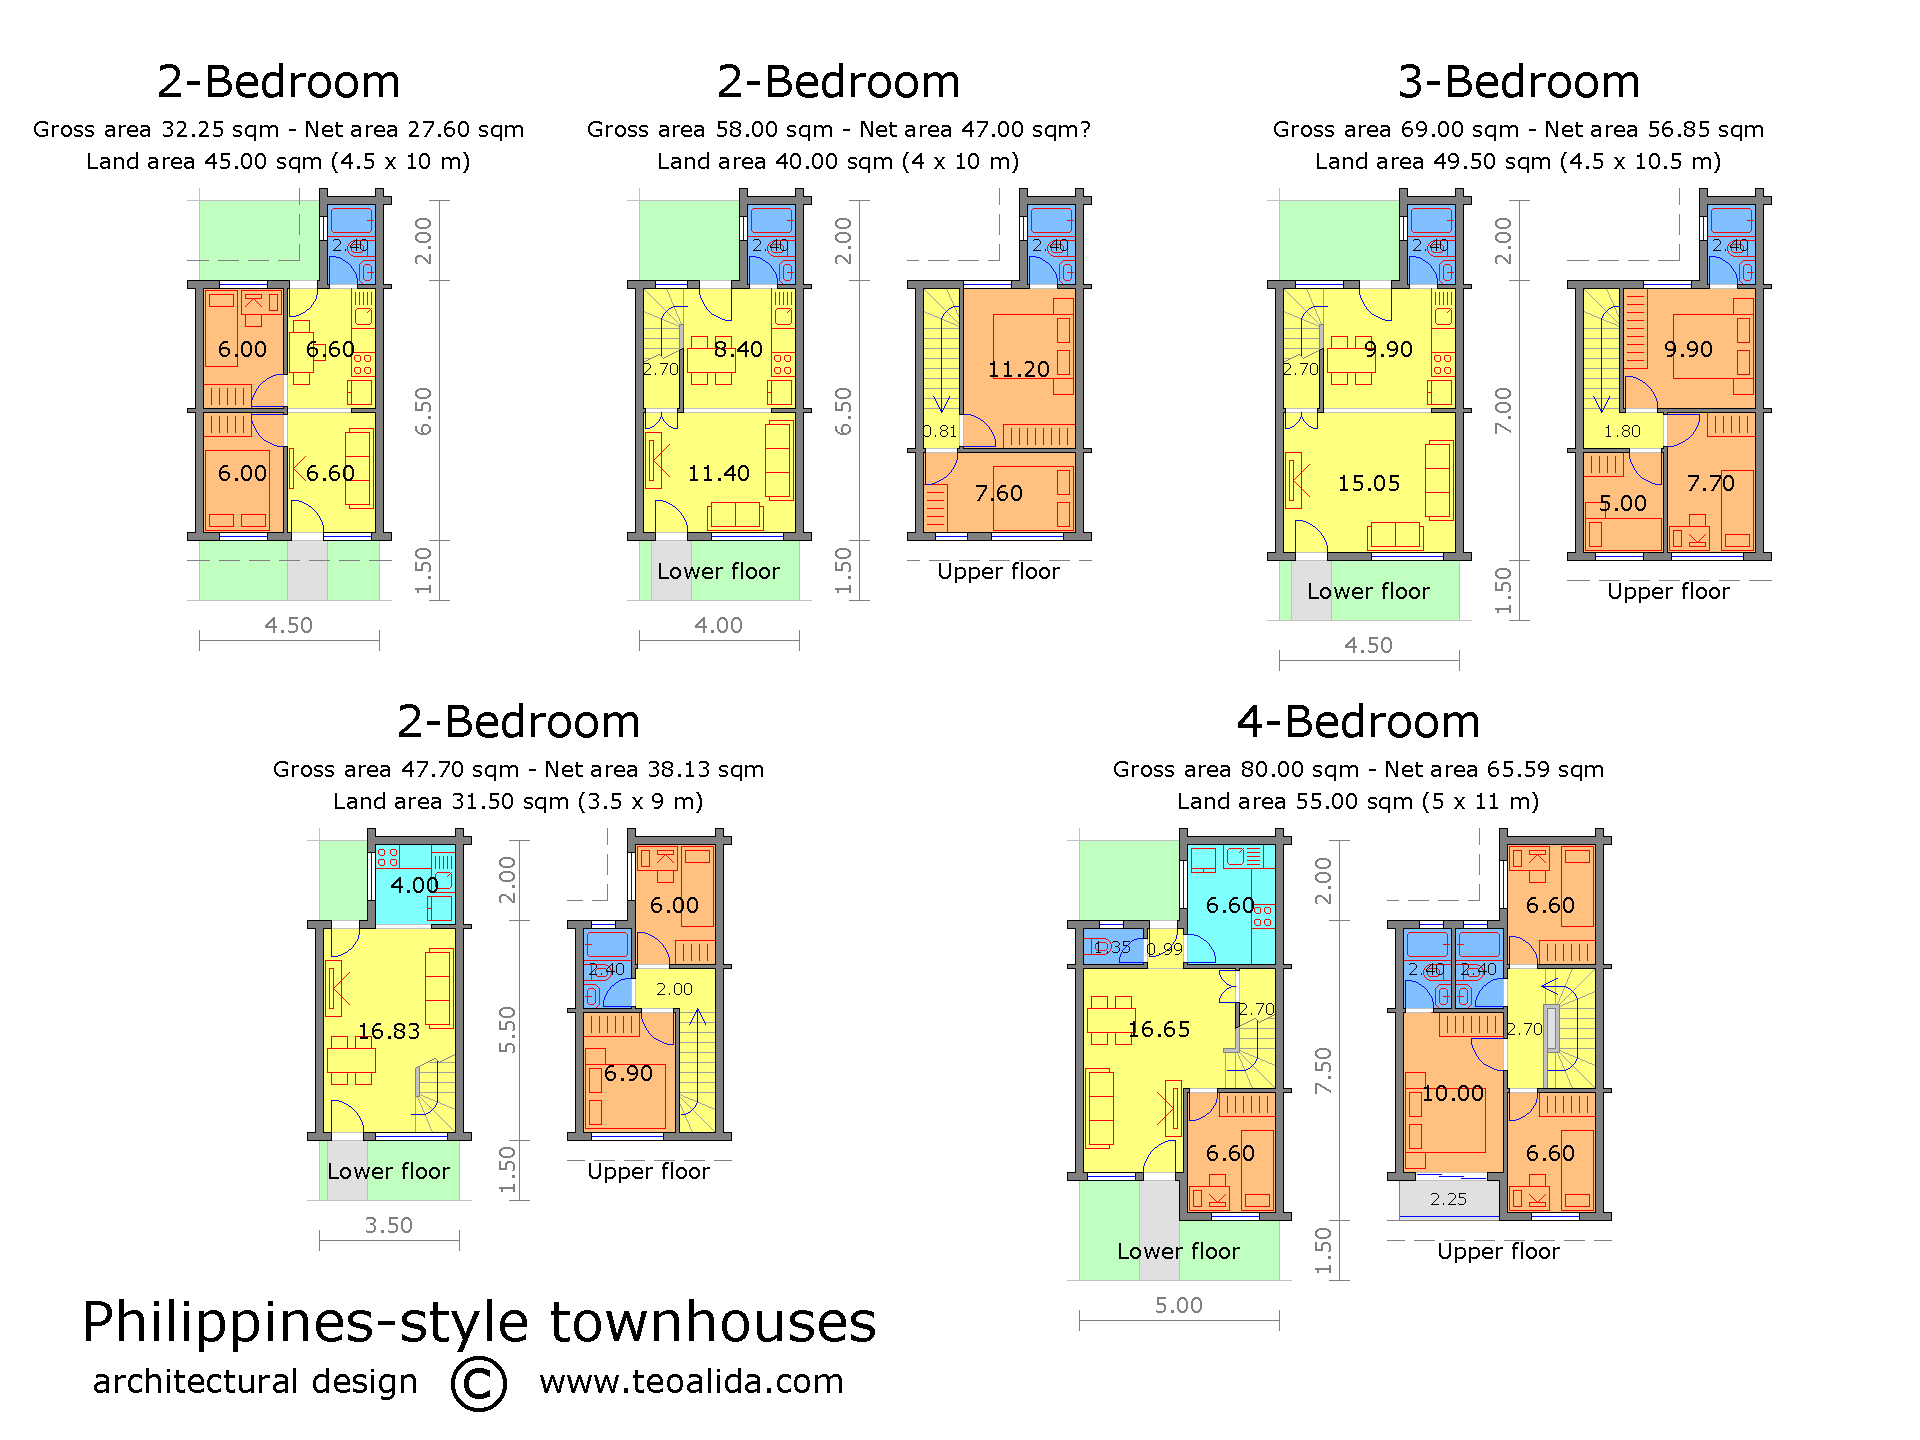 House floor plans 50-400 sqm designed by Teoalida | Teoalida Website